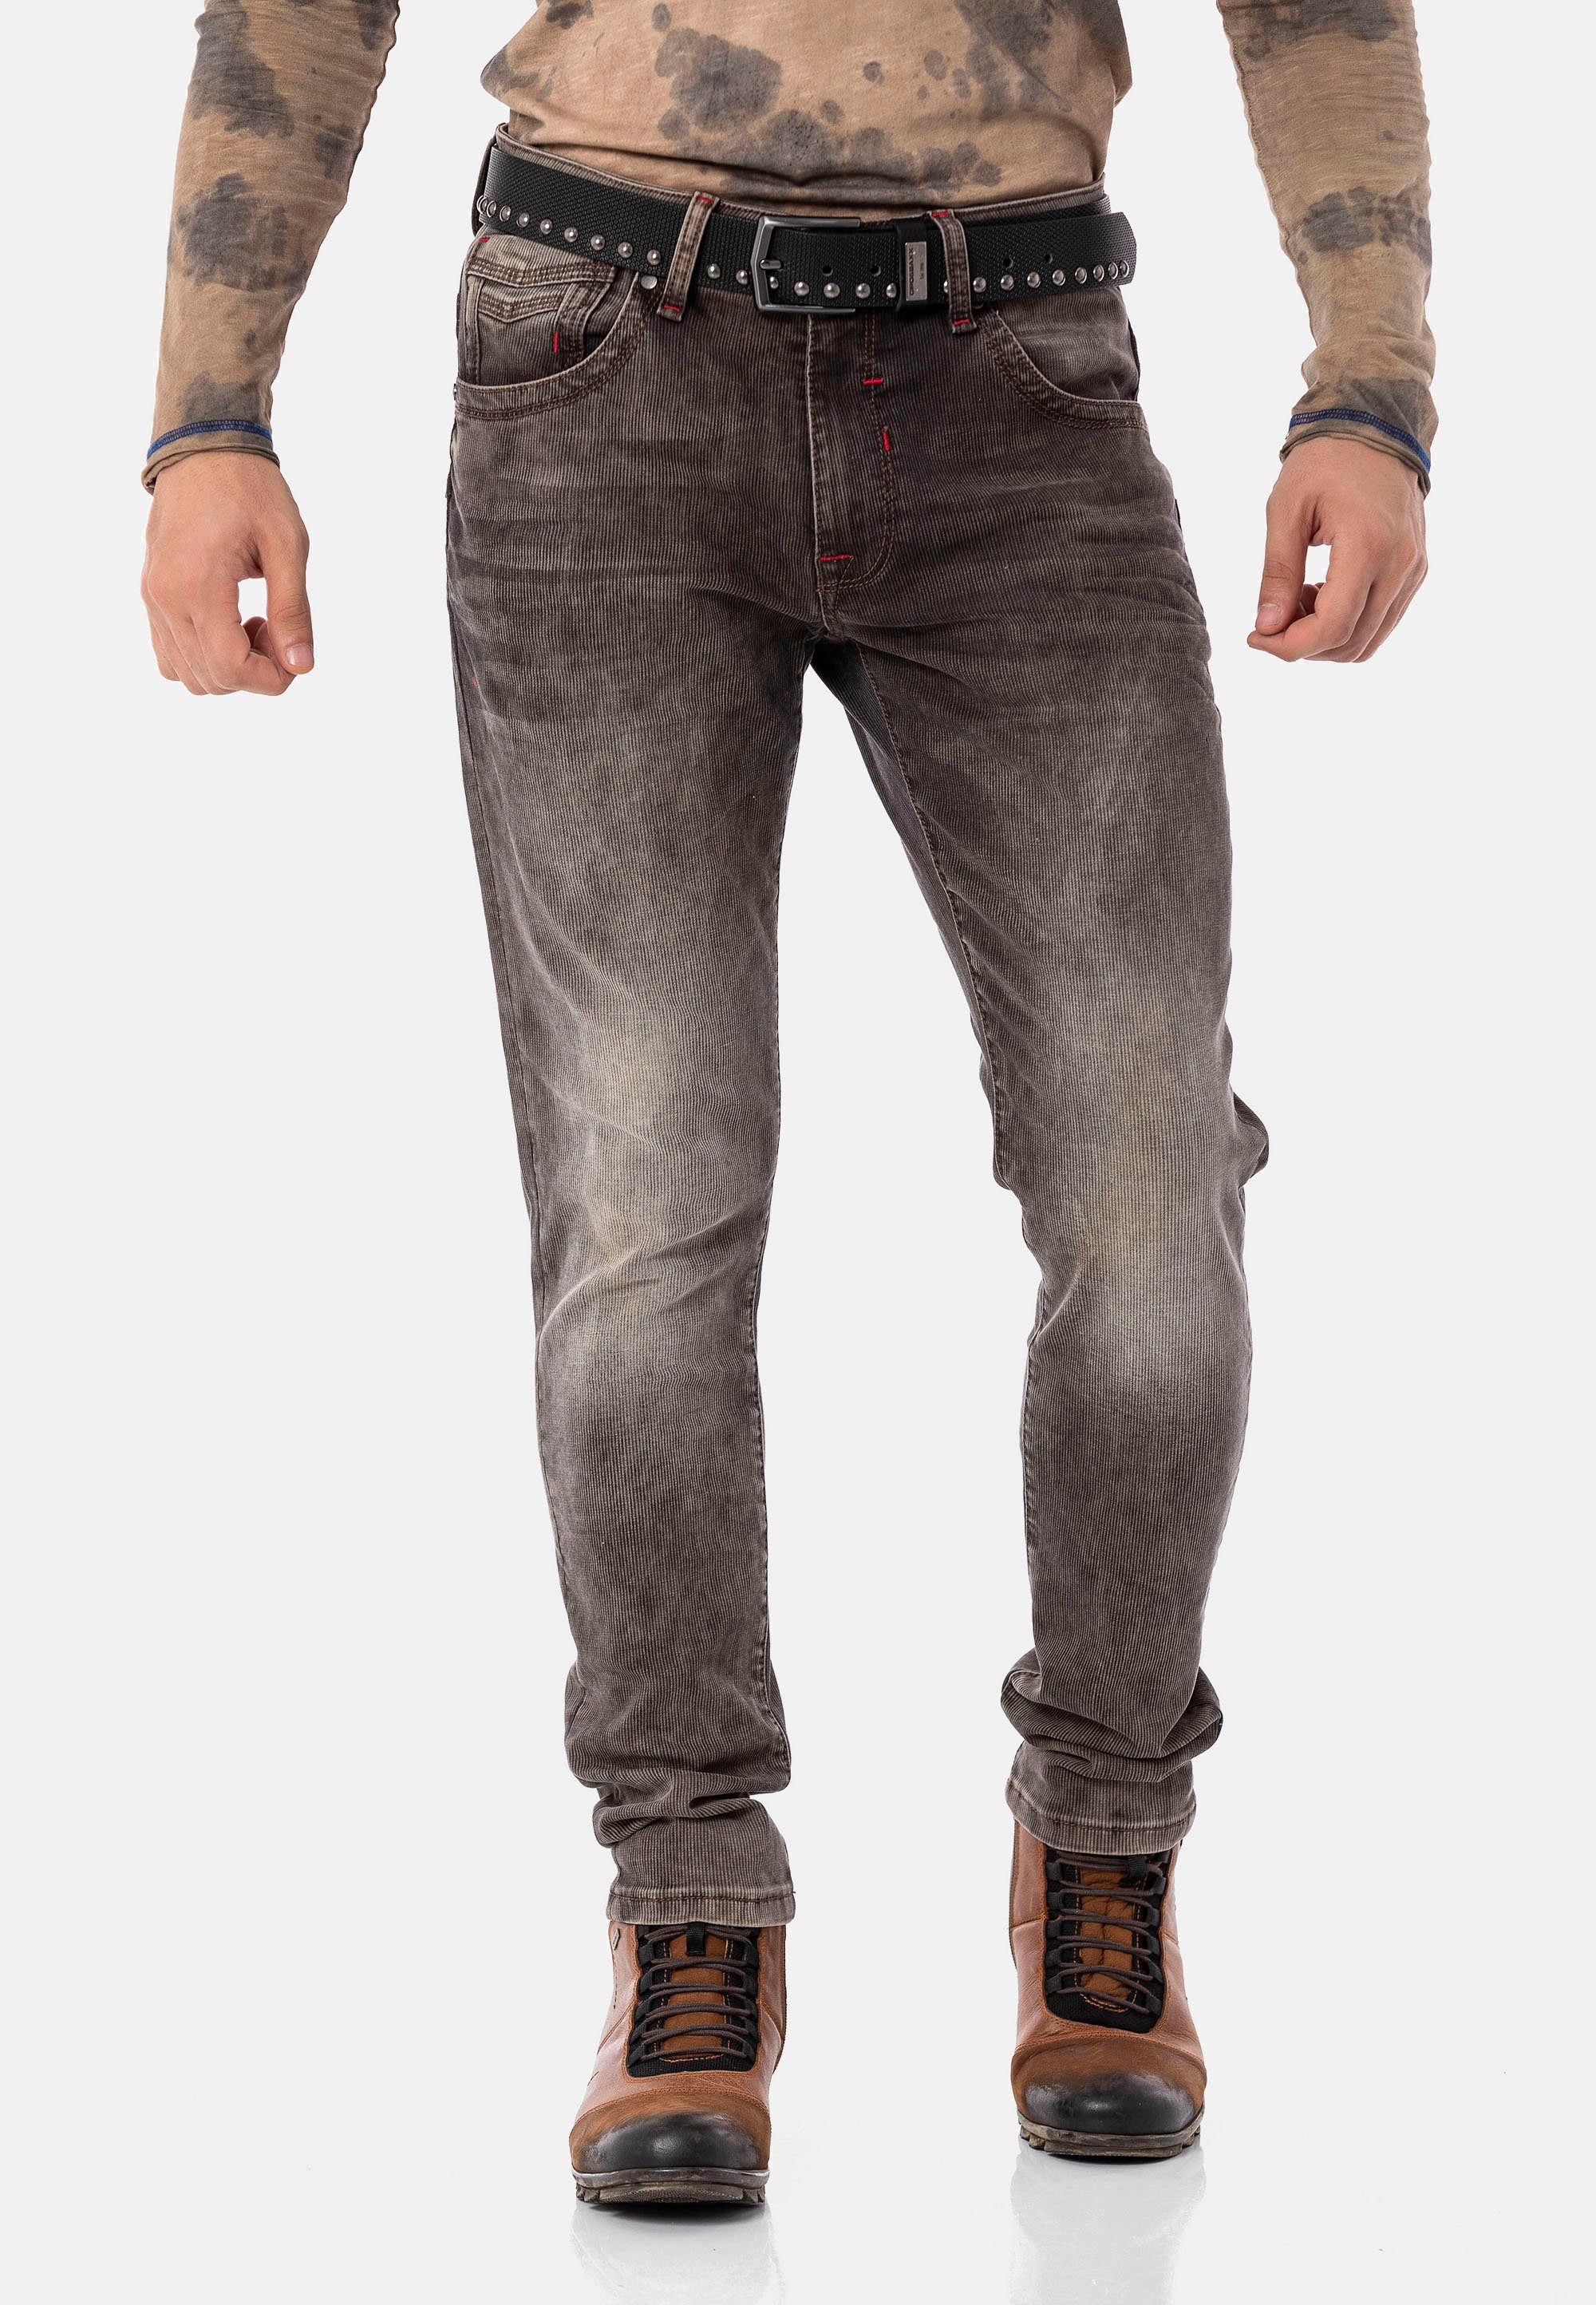 Cipo Straight-Jeans braun in Baxx & Cord-Design stilvollem